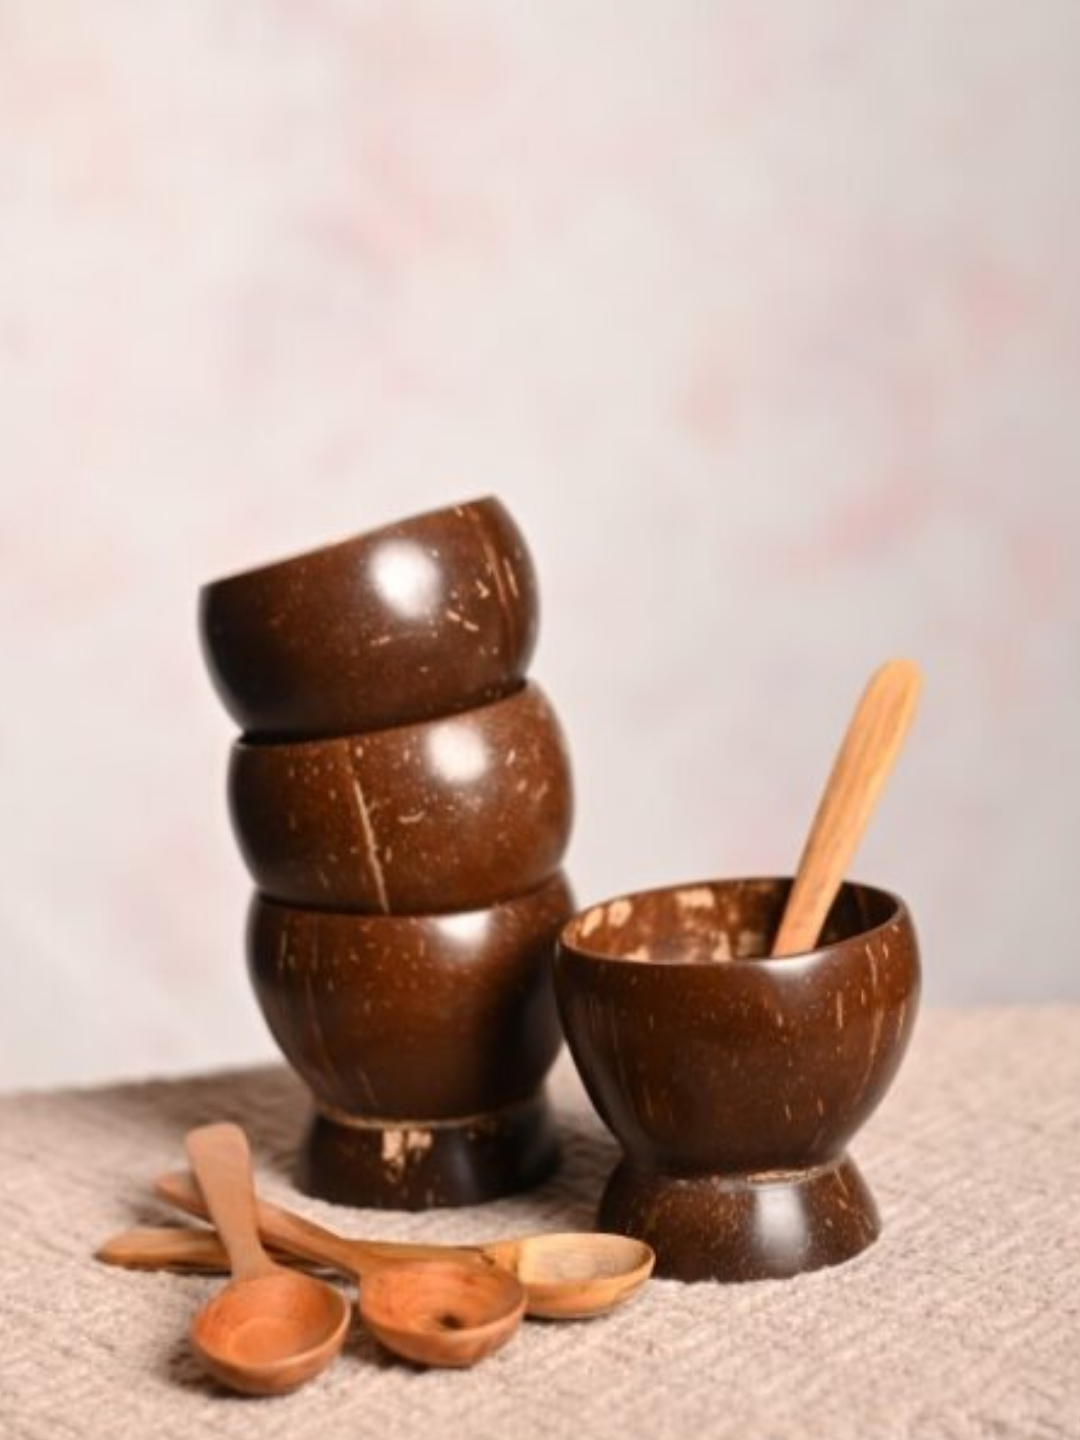 Handmade Coco Breakfast Bowls